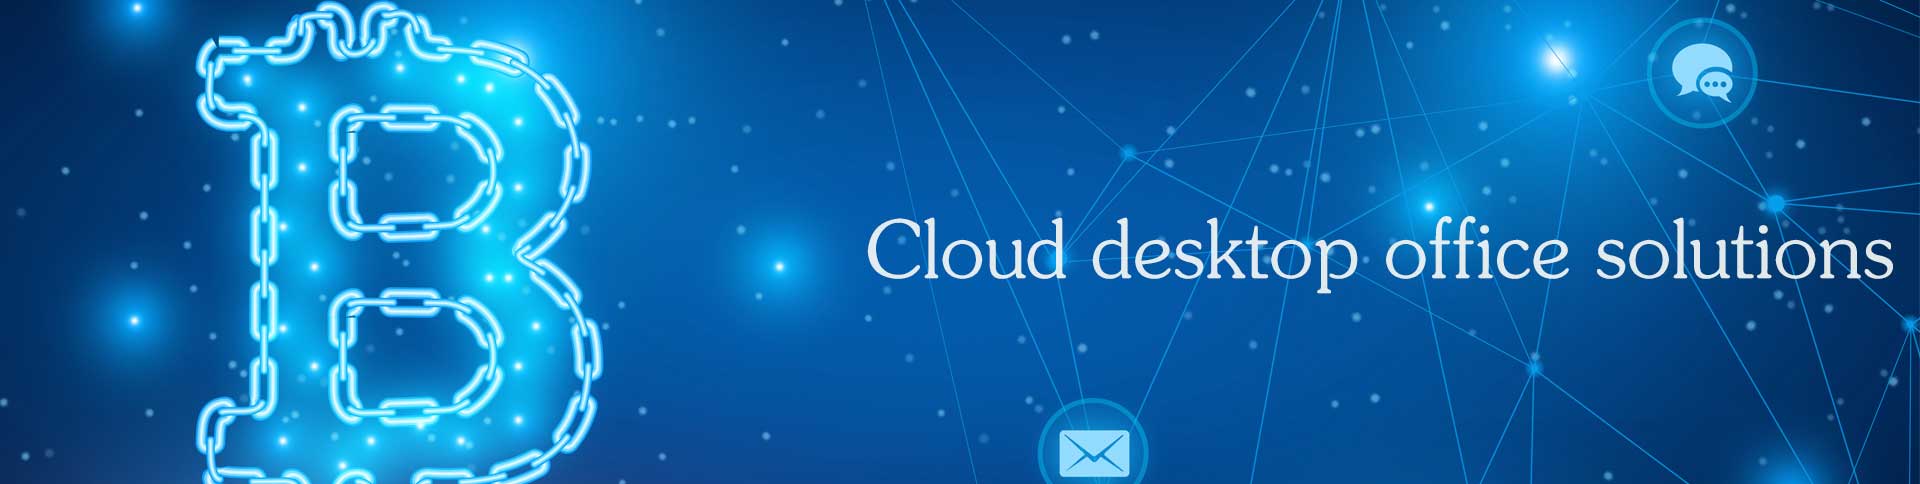 Cloud desktop office solutions_OSV Intelligent Desktop Virtualization  PC Manager IDV VDI